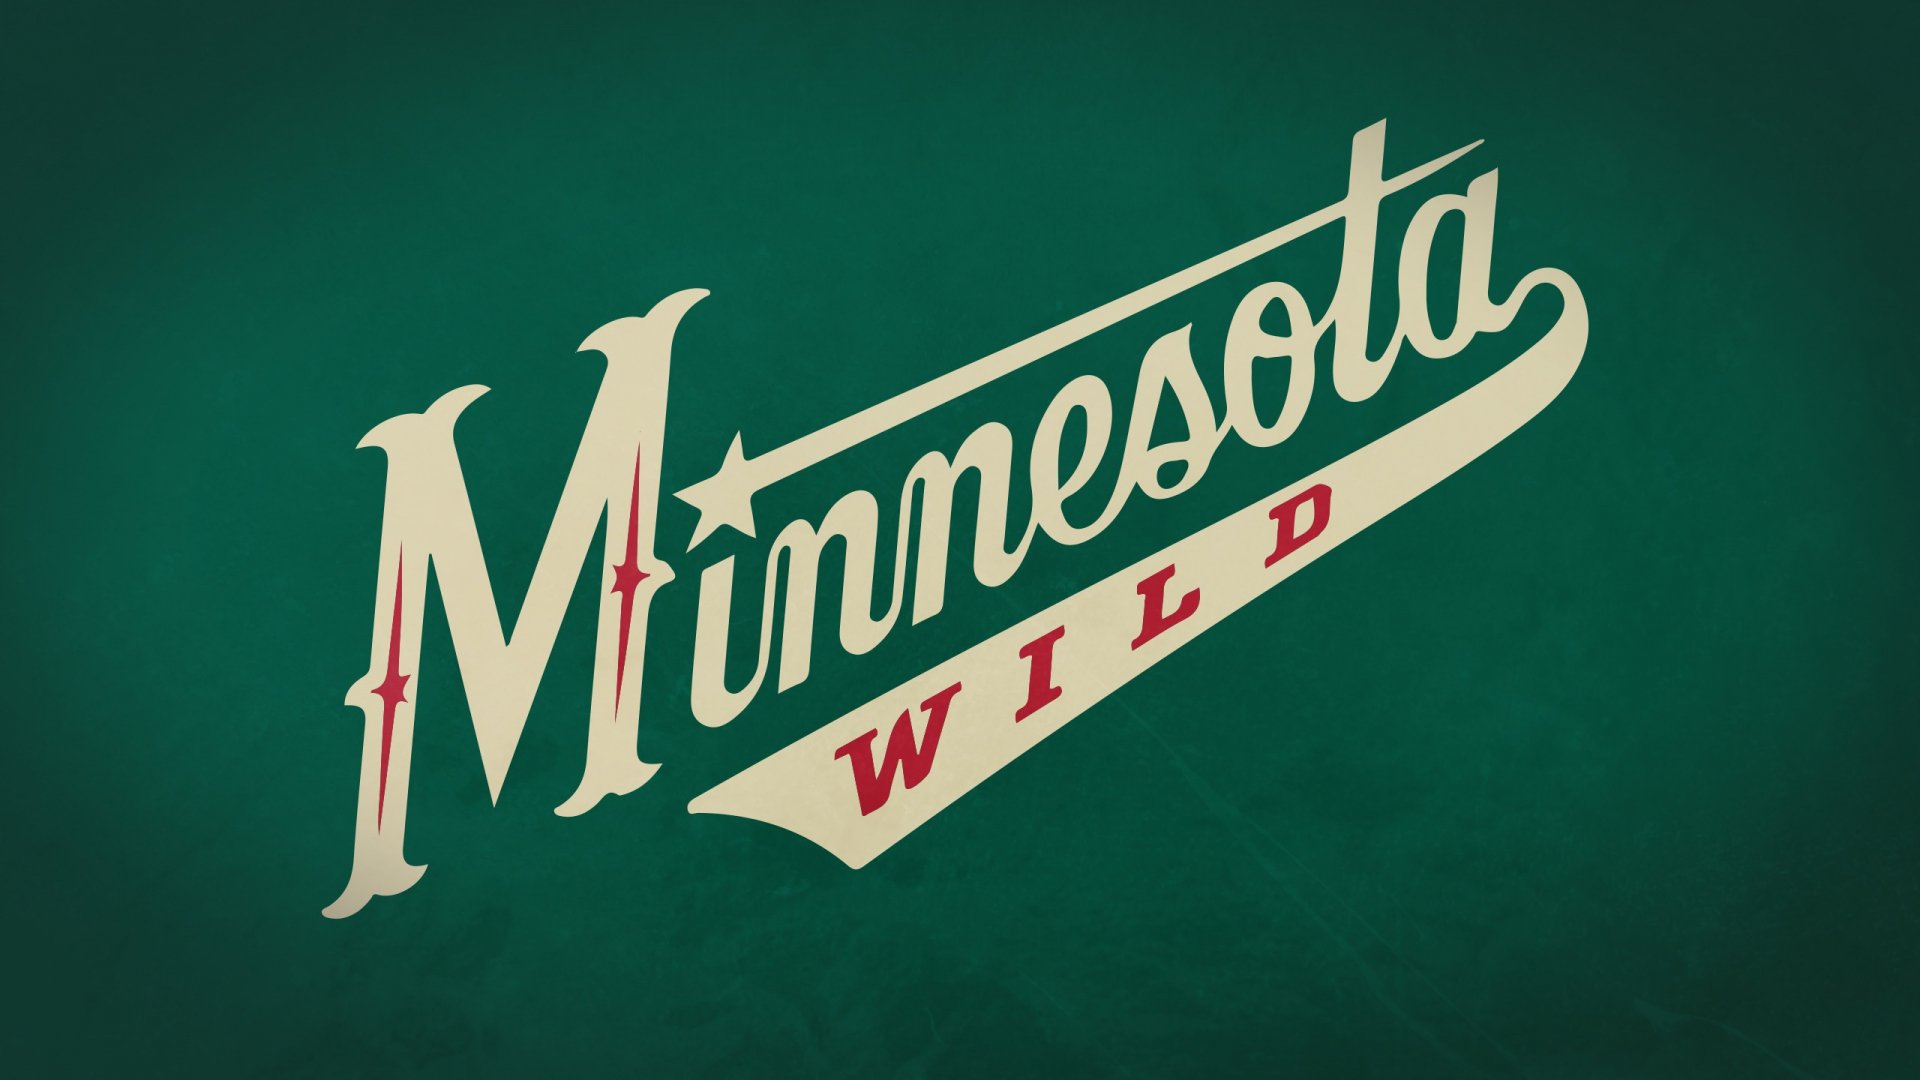 Minnesota Wild Full HD Wallpaper and Background Image 2560x1440 ID